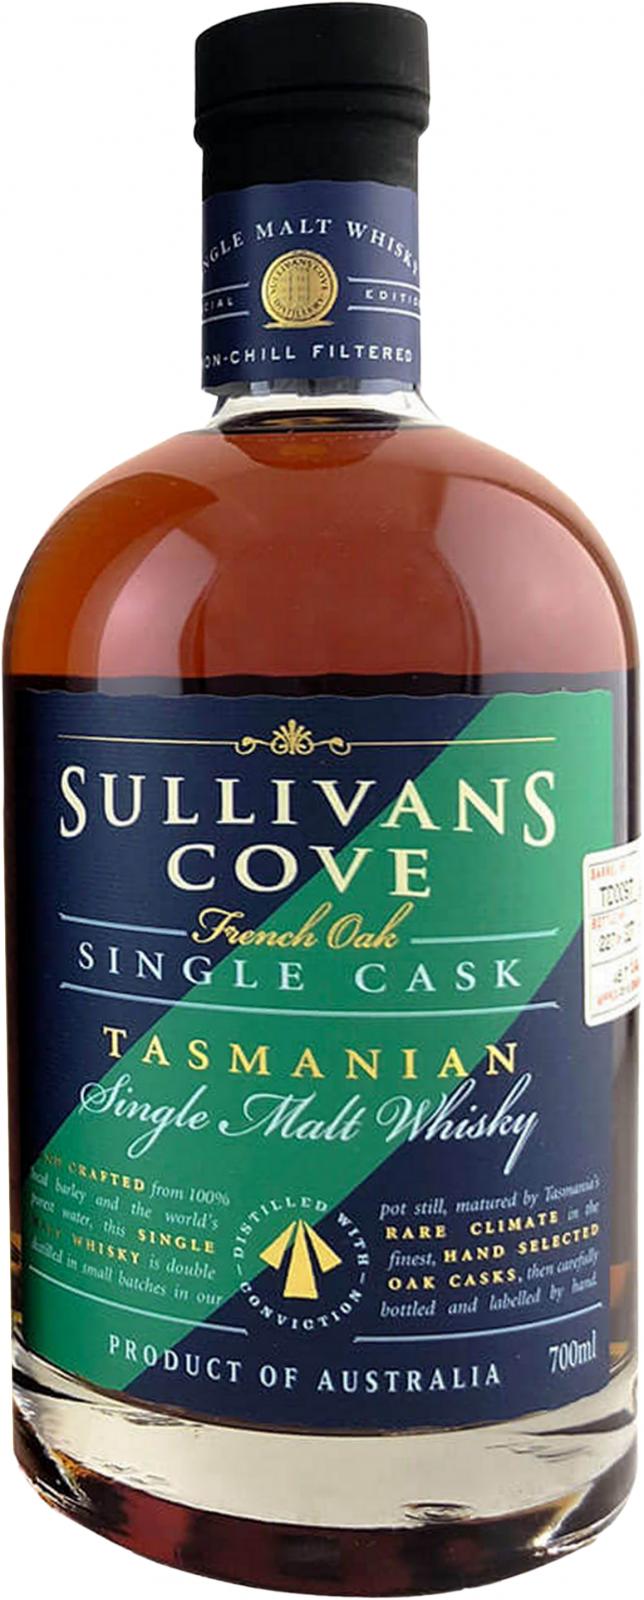 Sullivans Cove 2006 Single Cask French Oak White Wine TD0097 46.7% 700ml